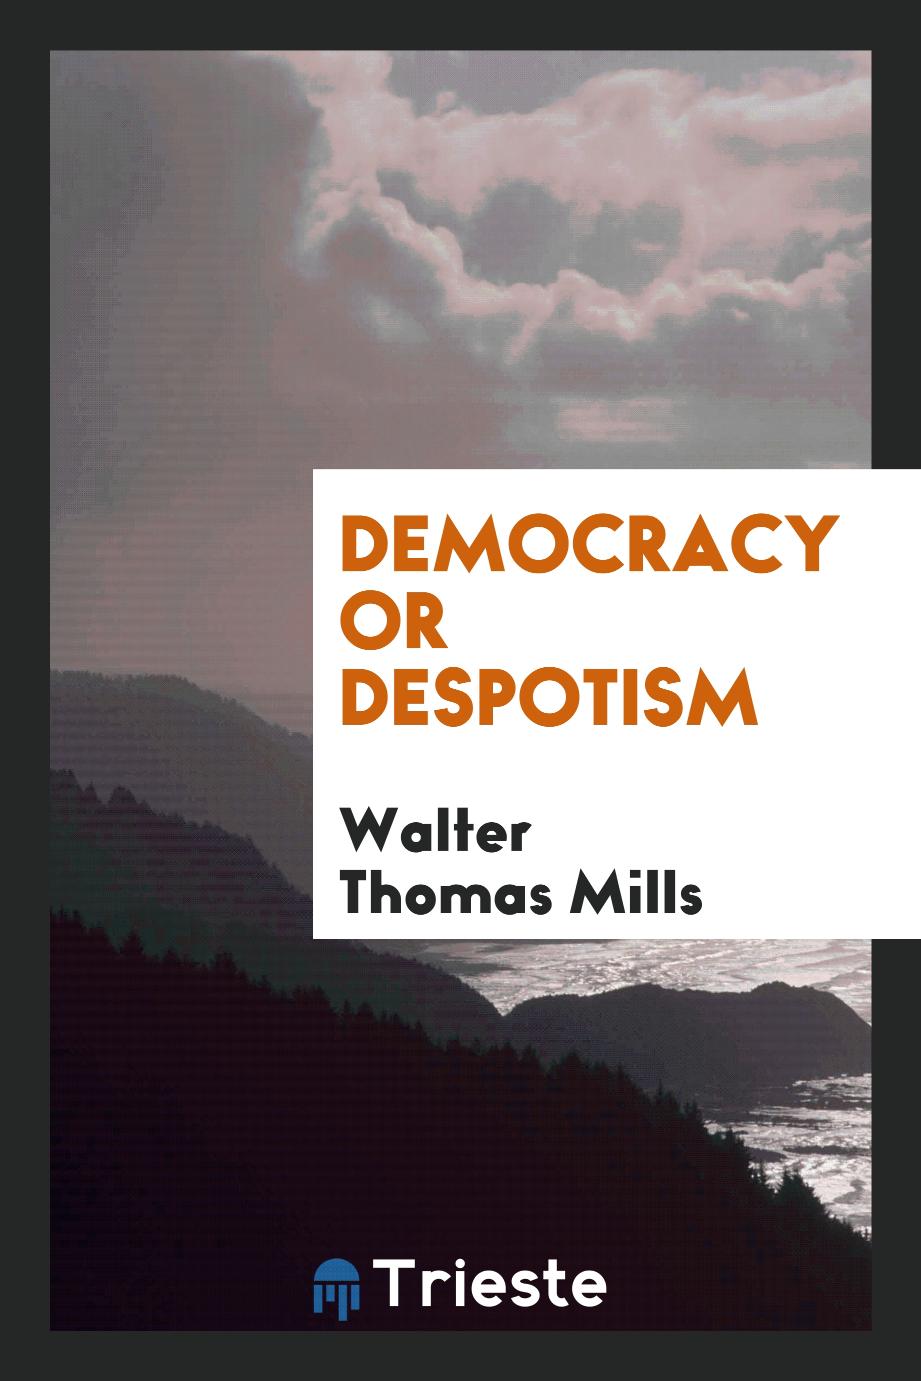 Democracy or despotism